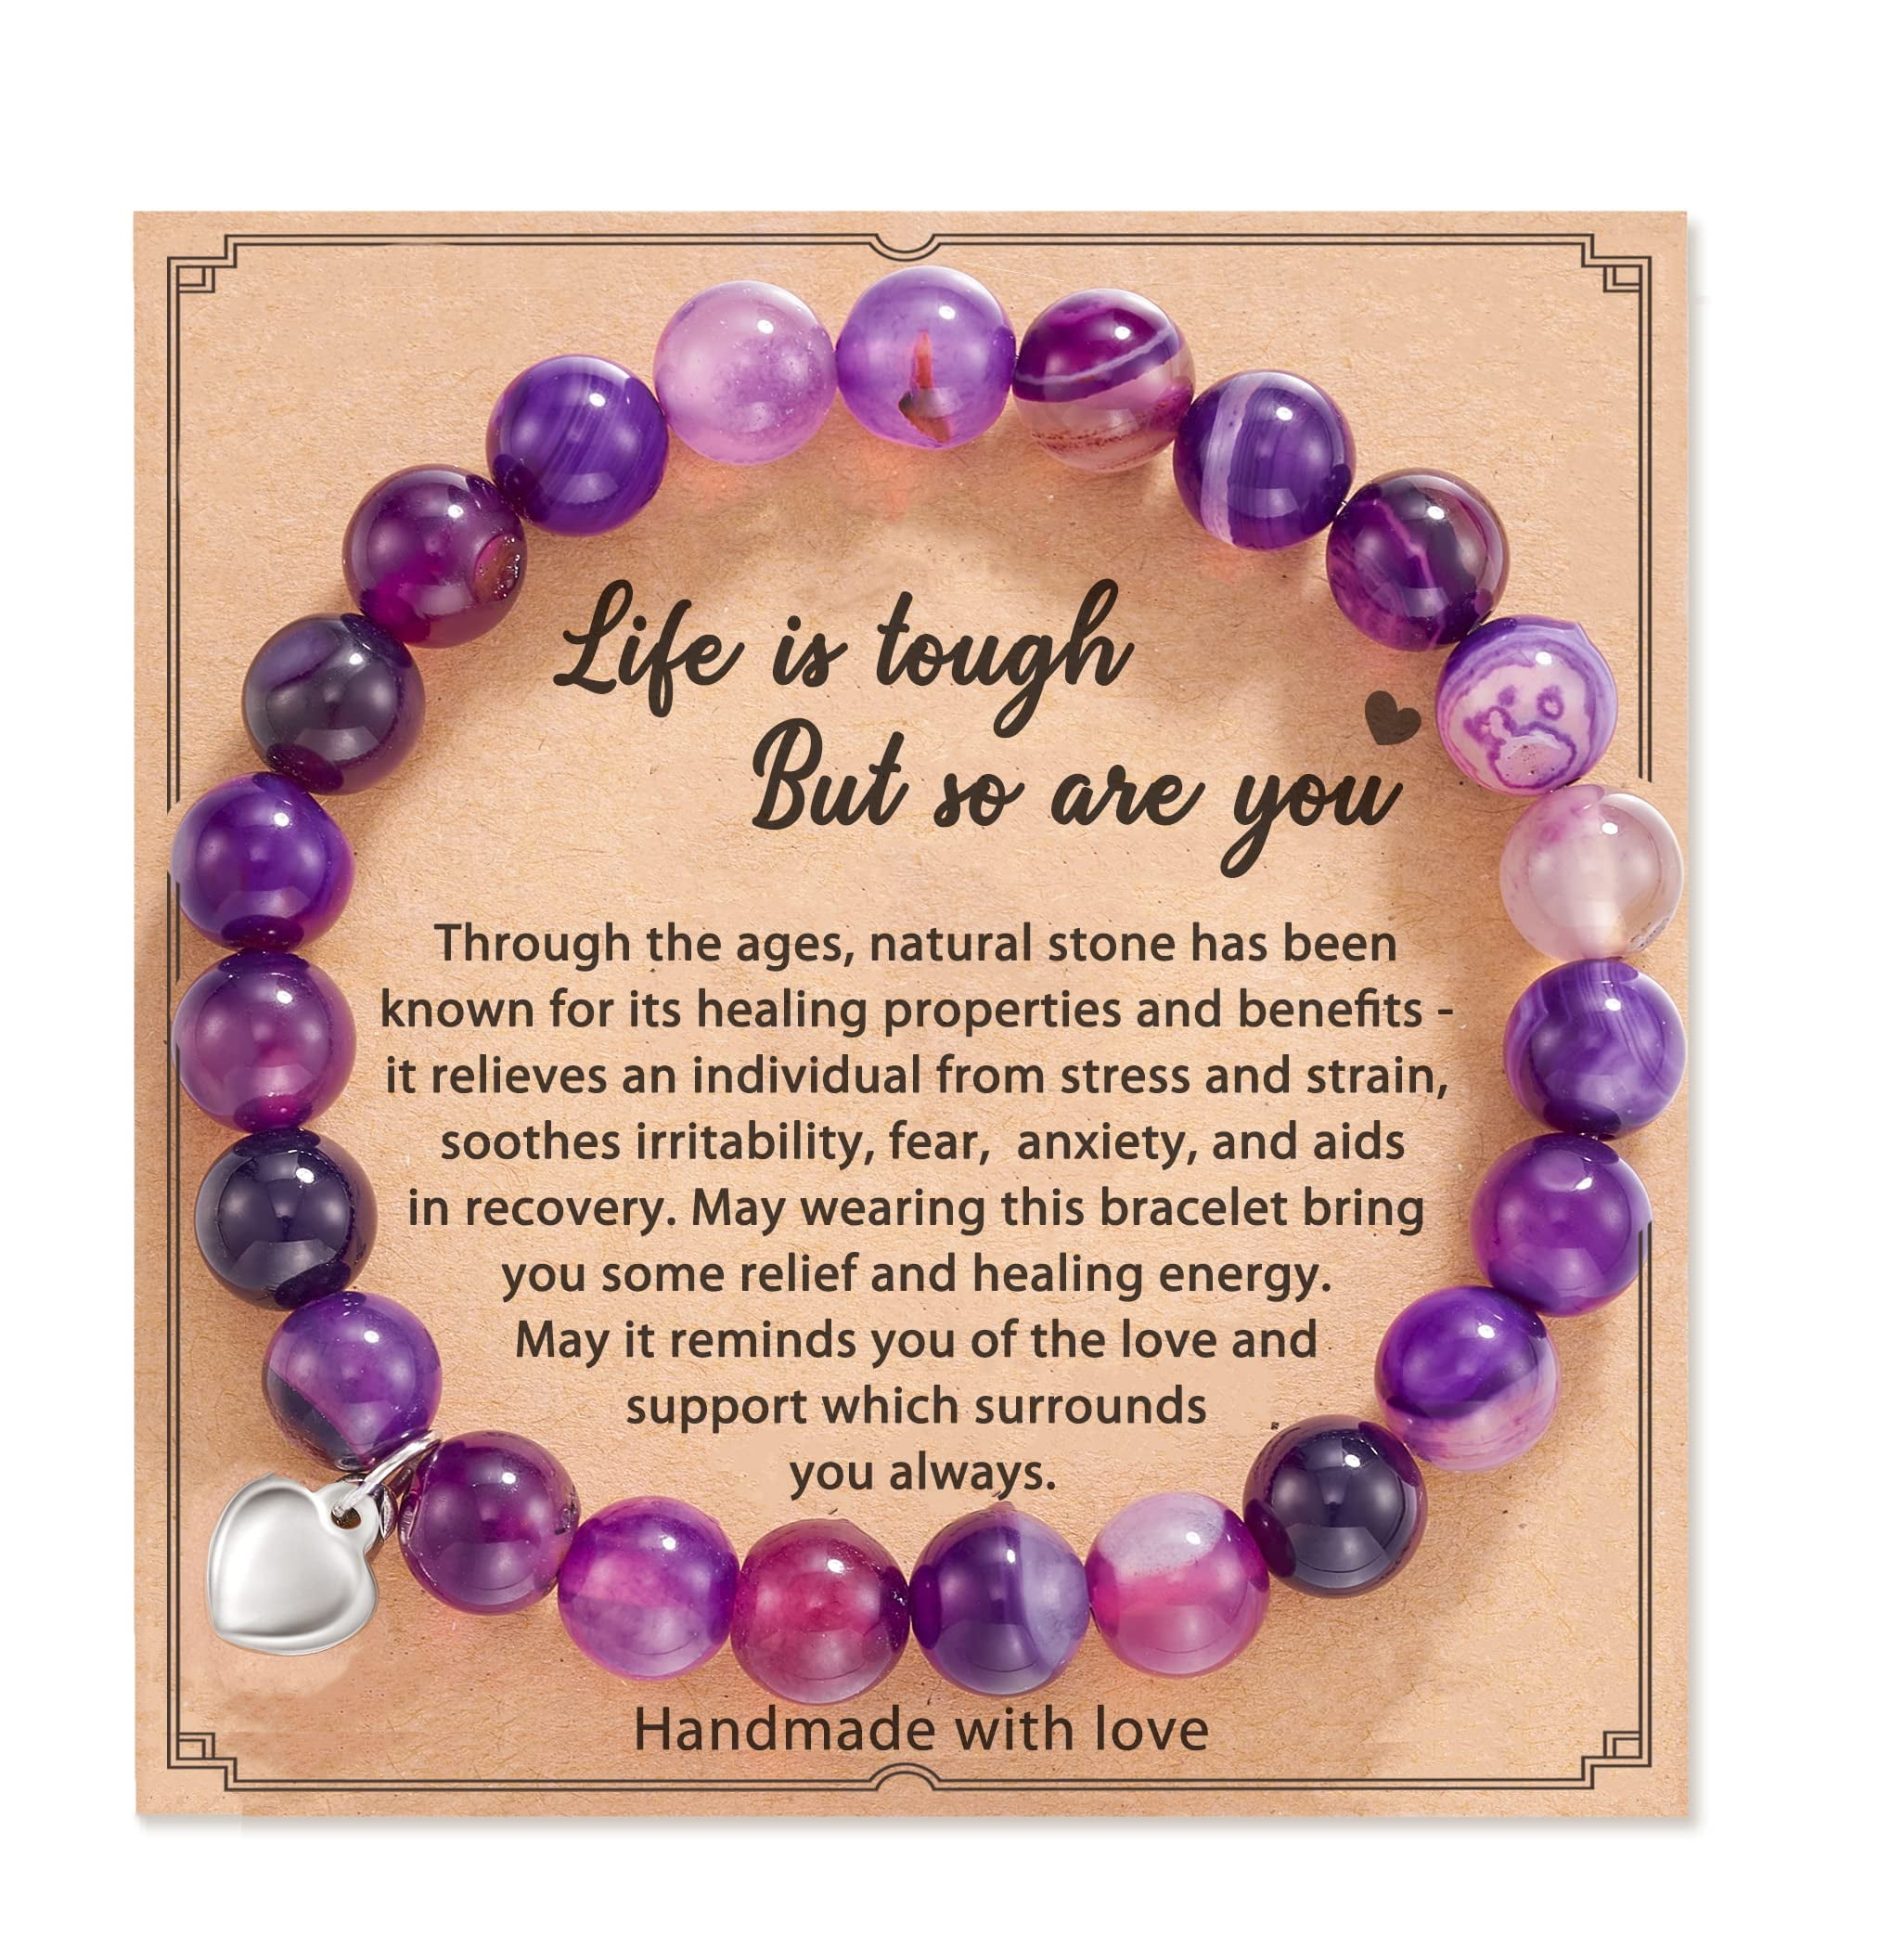 Top Natural Purple Amethyst Quartz Bracelet Jewelry For Women Man Love Gift  Crystal Beads Uruguay Gemstone Strands AAAAA 7-18mm - AliExpress